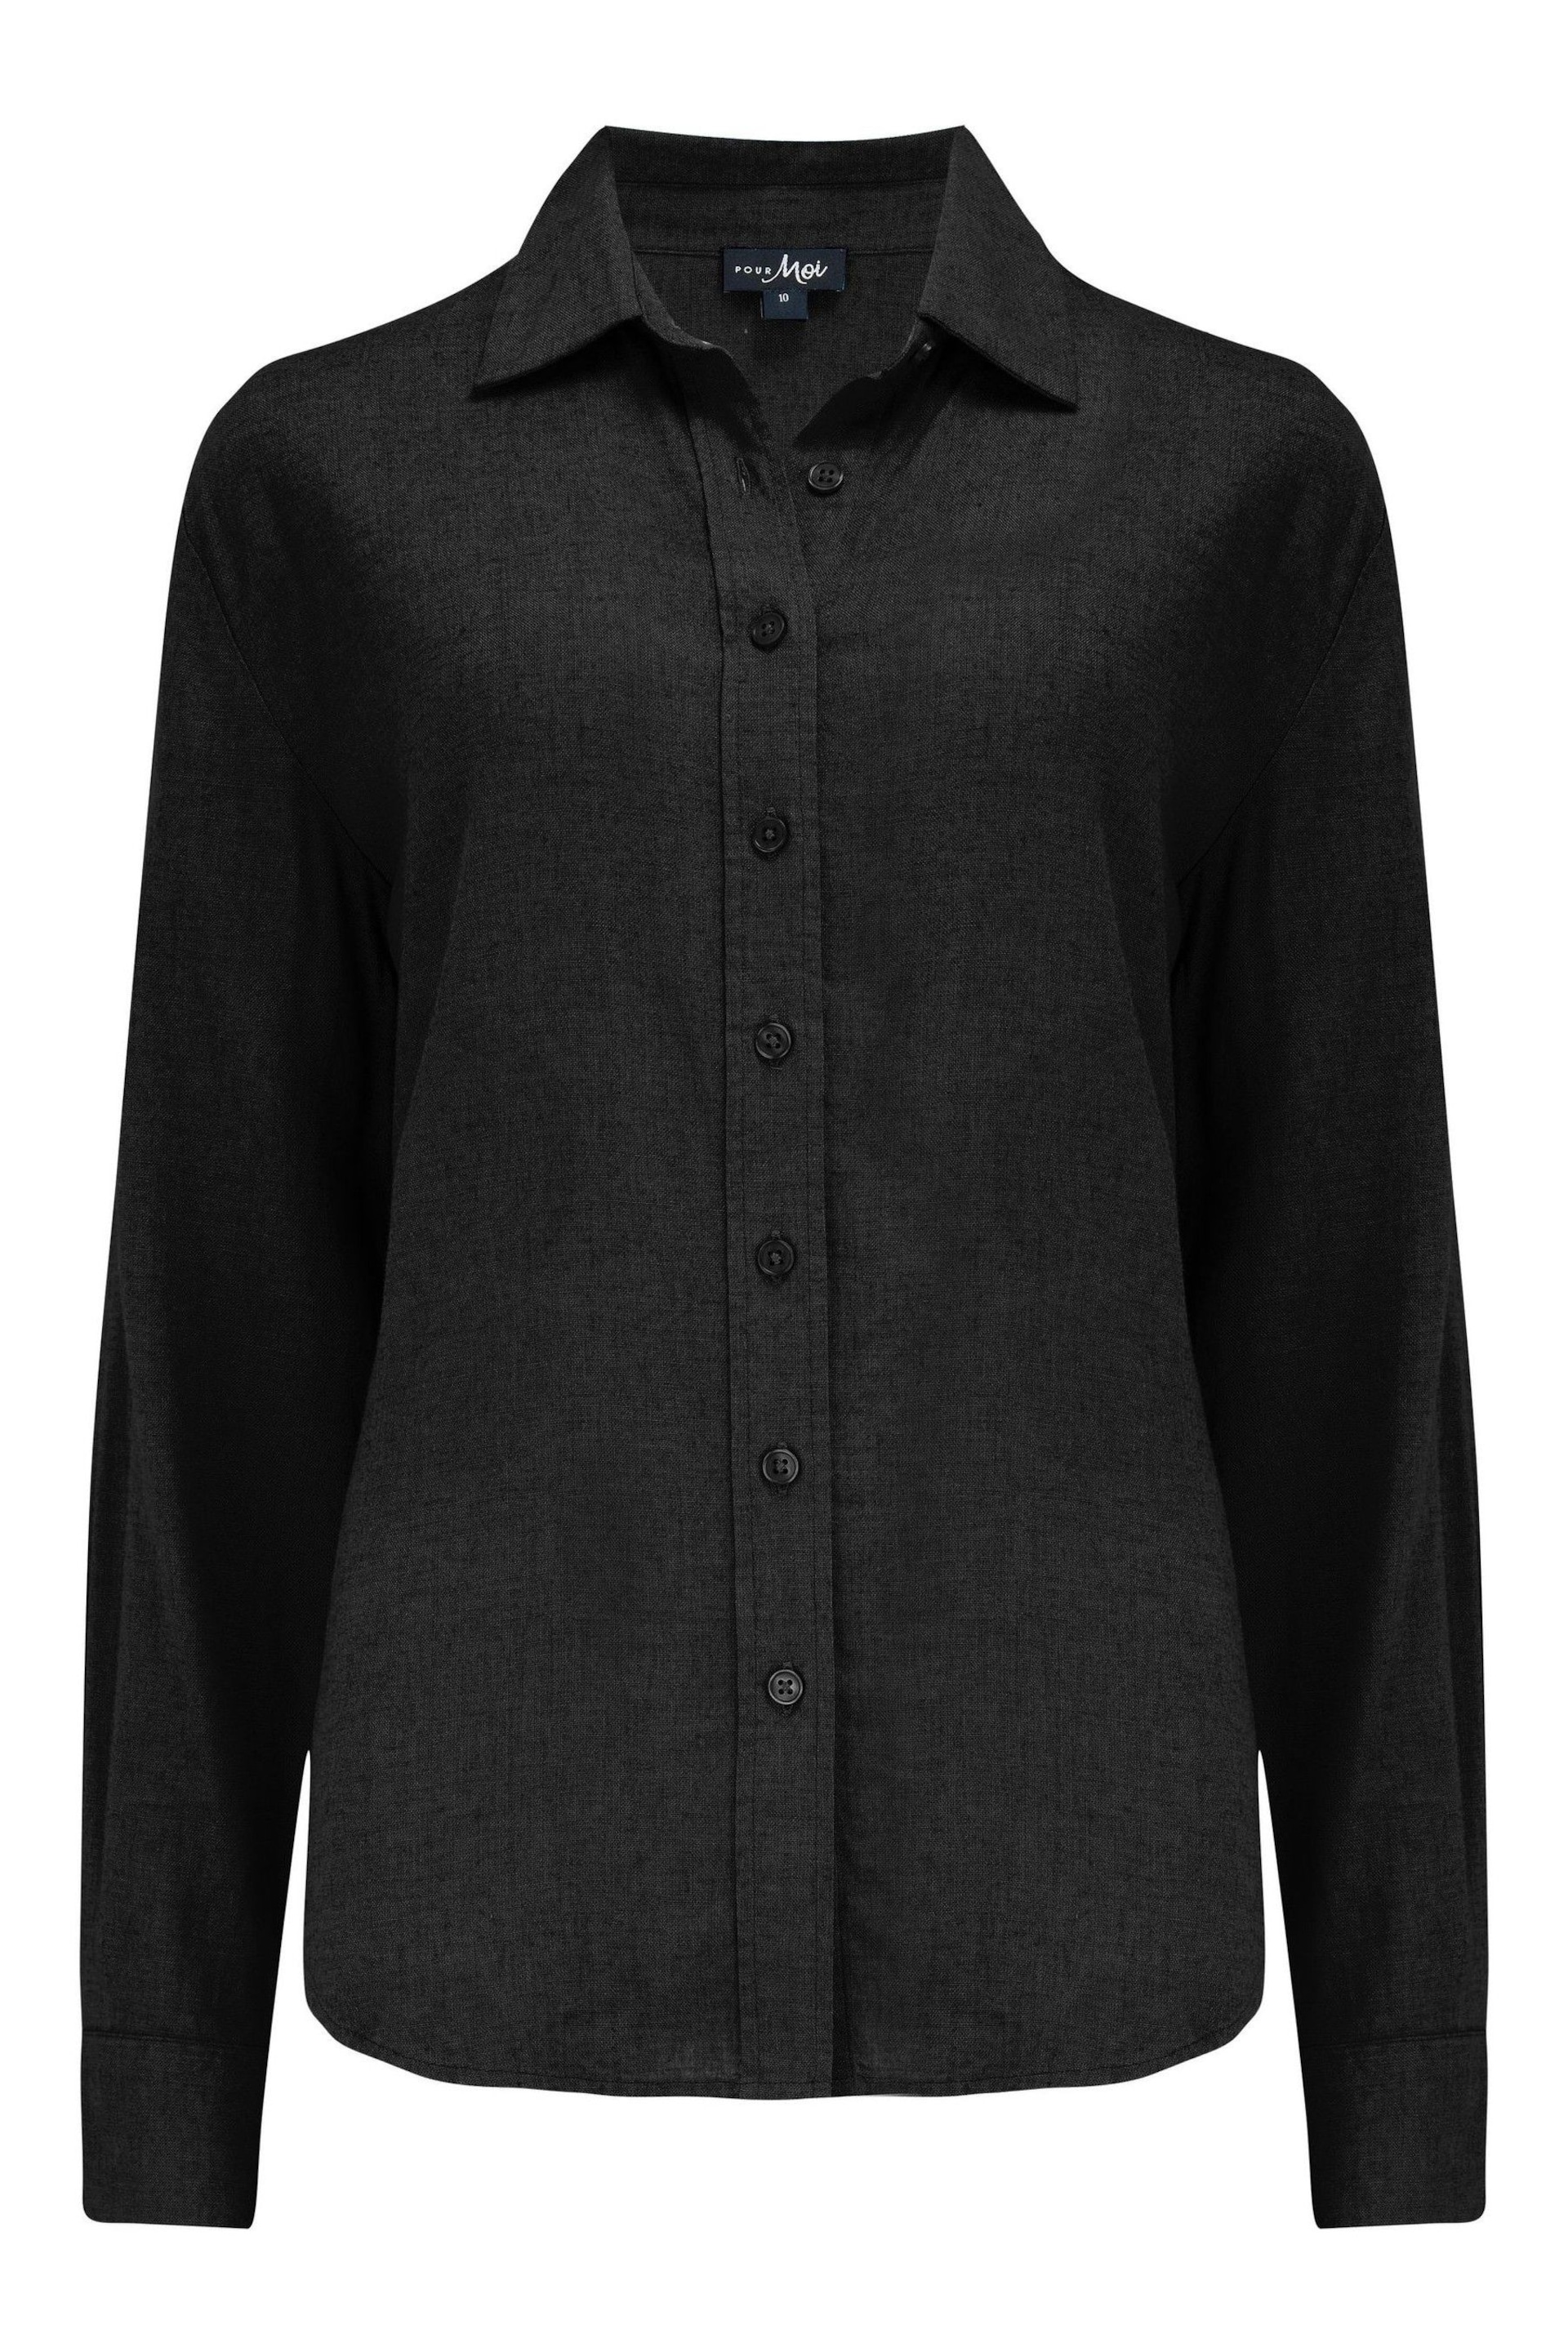 Pour Moi Black Wren Button Through Linen Blend Long Sleeve Shirt - Image 3 of 4